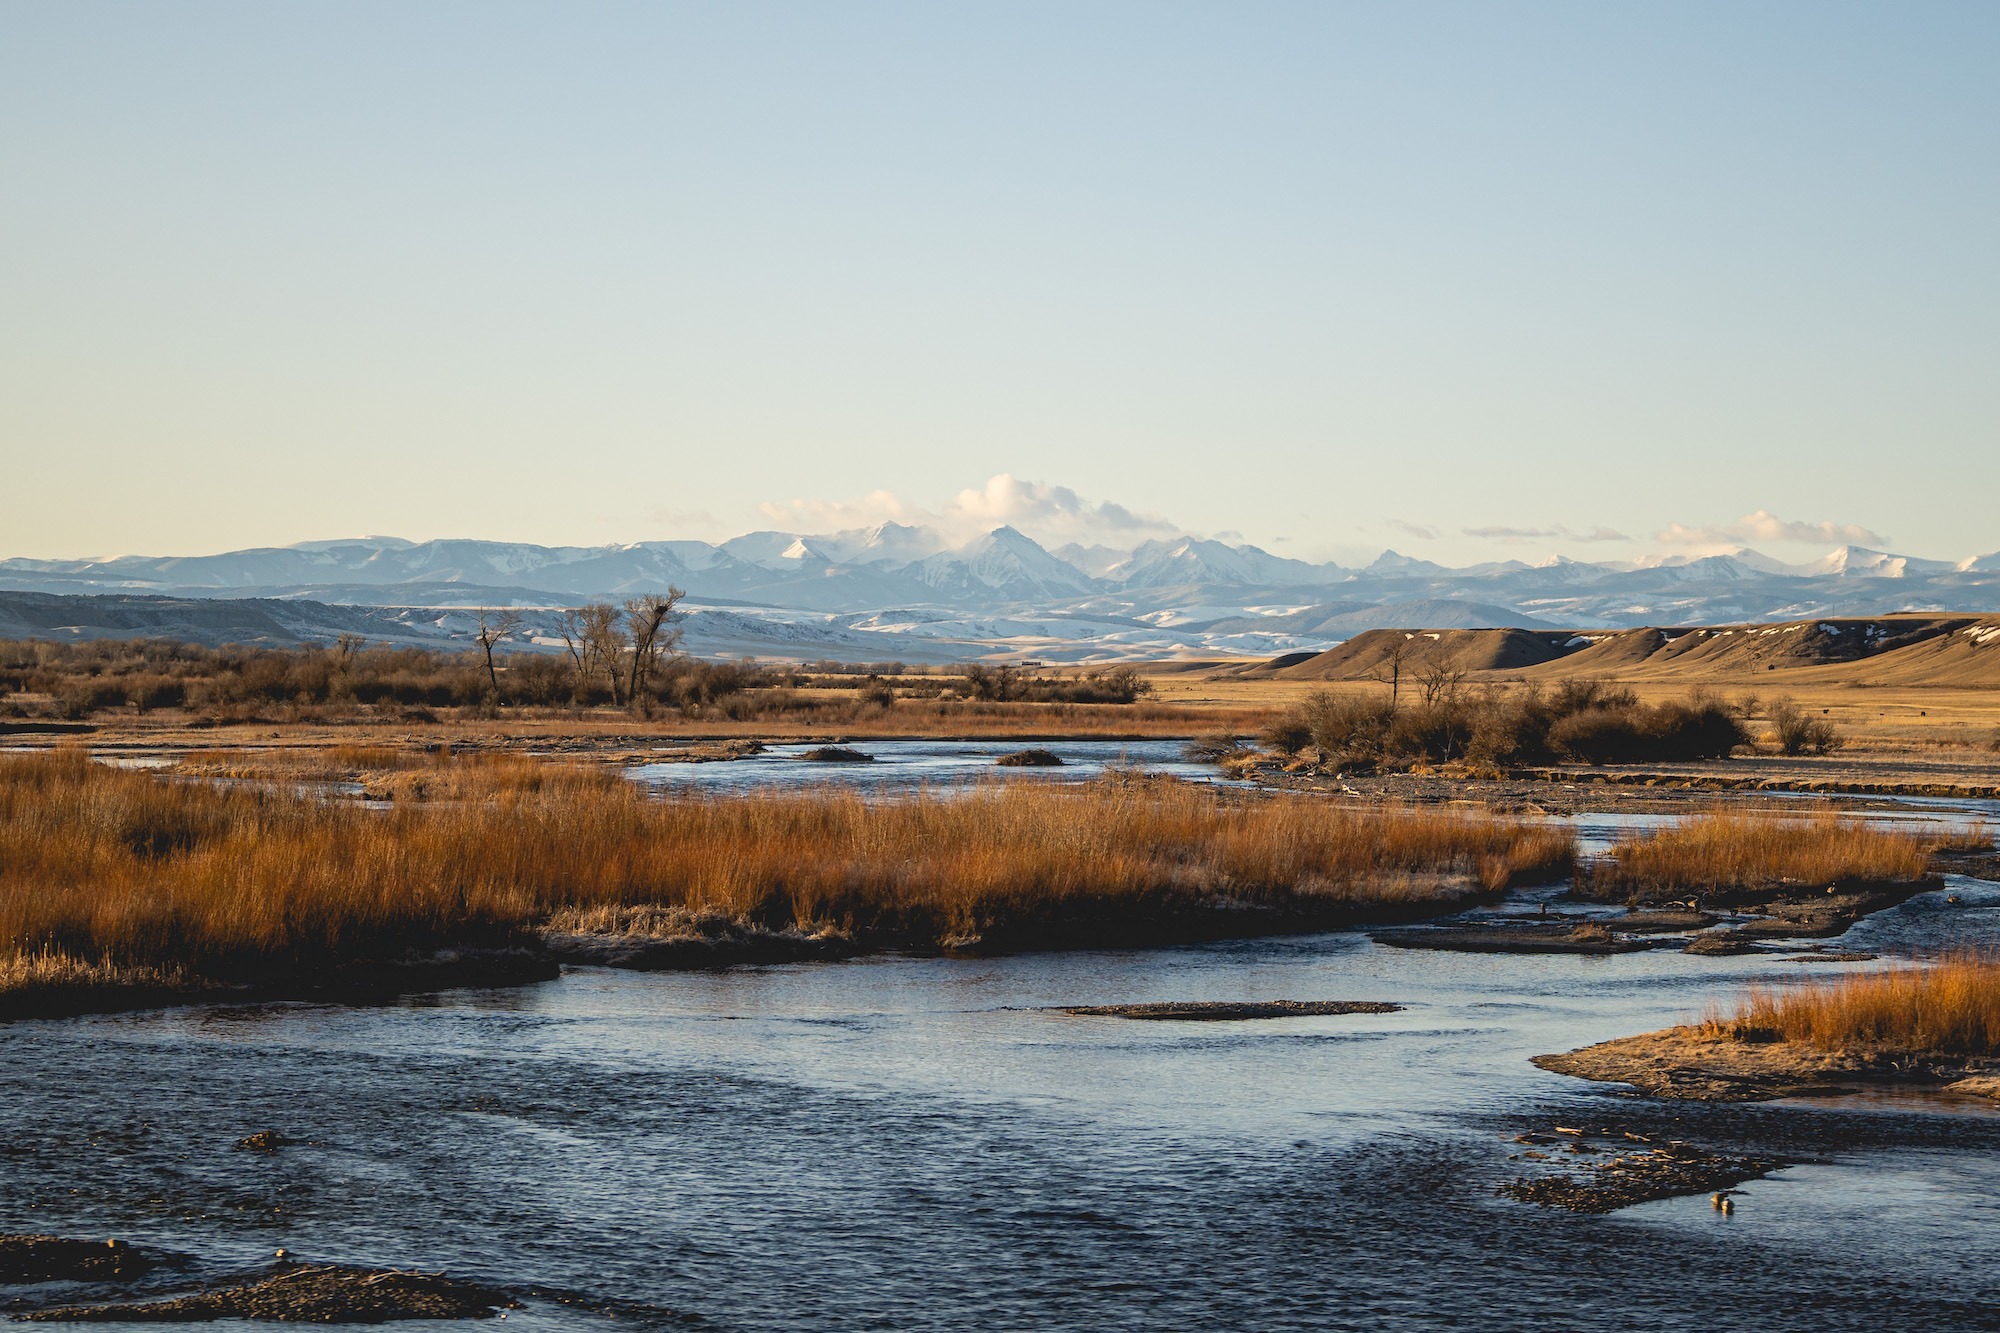 Decreasing flood risk in rural communities: a pilot program in Three Forks, Montana